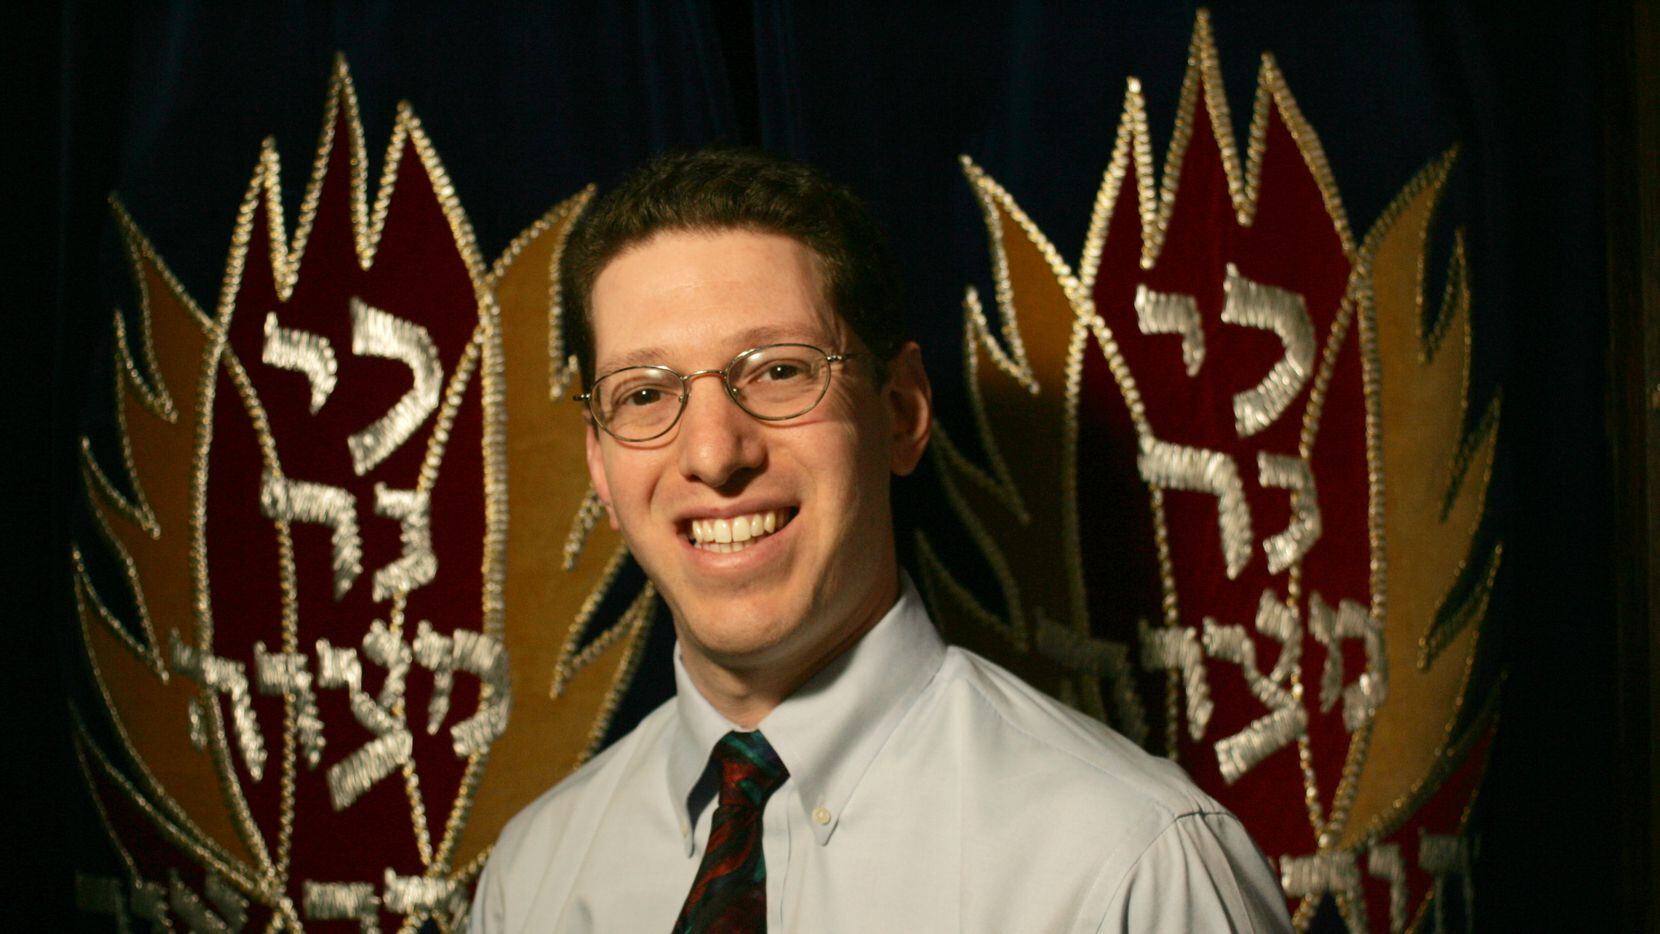 Rabbi Charlie Cytron-Walker of Congregation Beth Israel in Colleyville